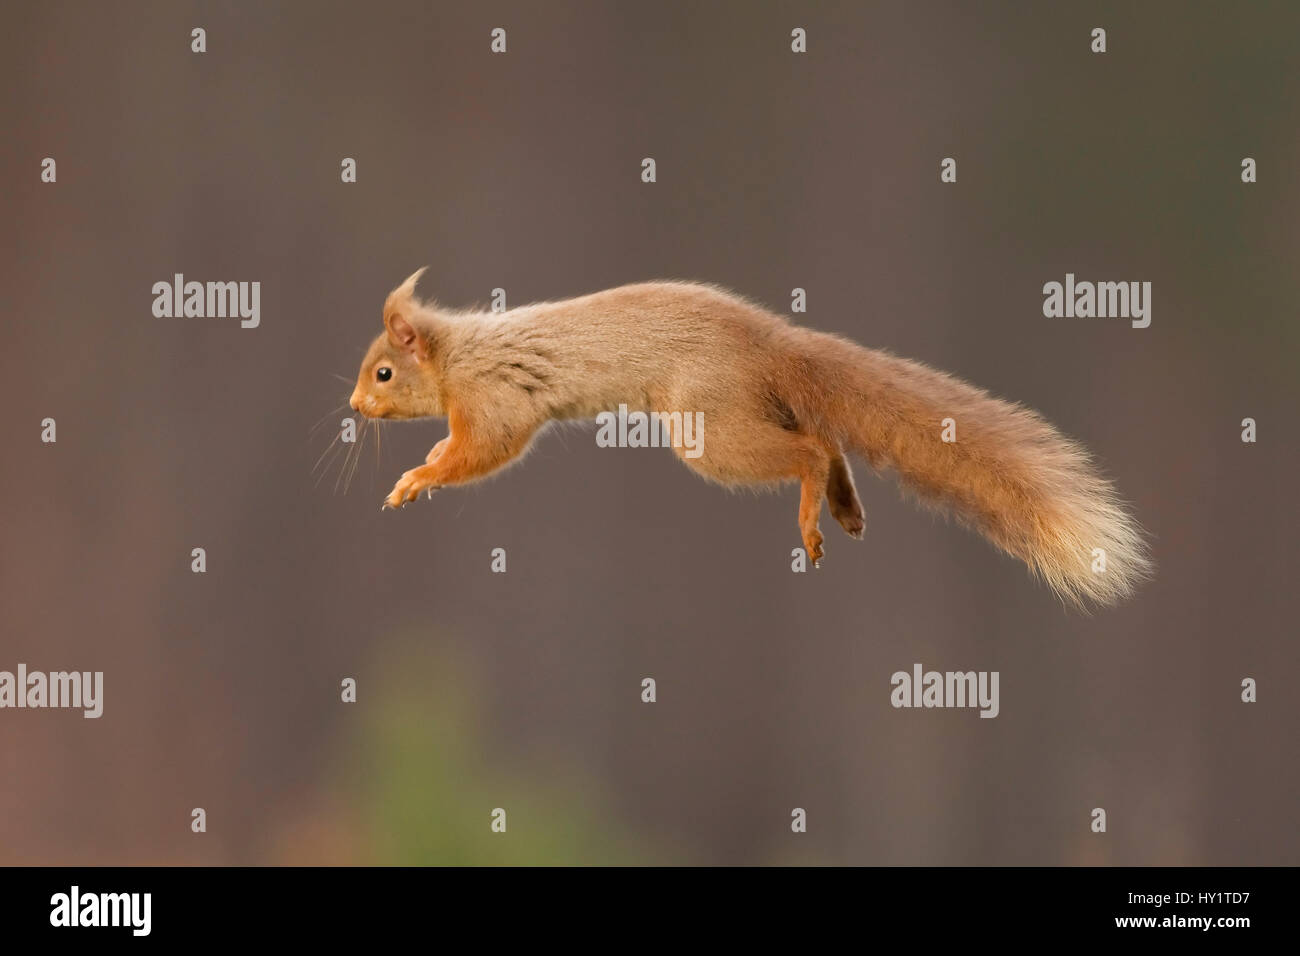 Red scoiattolo (Sciurus vulgaris) jumping, Cairngorms National Park, Scozia, marzo 2012. Foto Stock